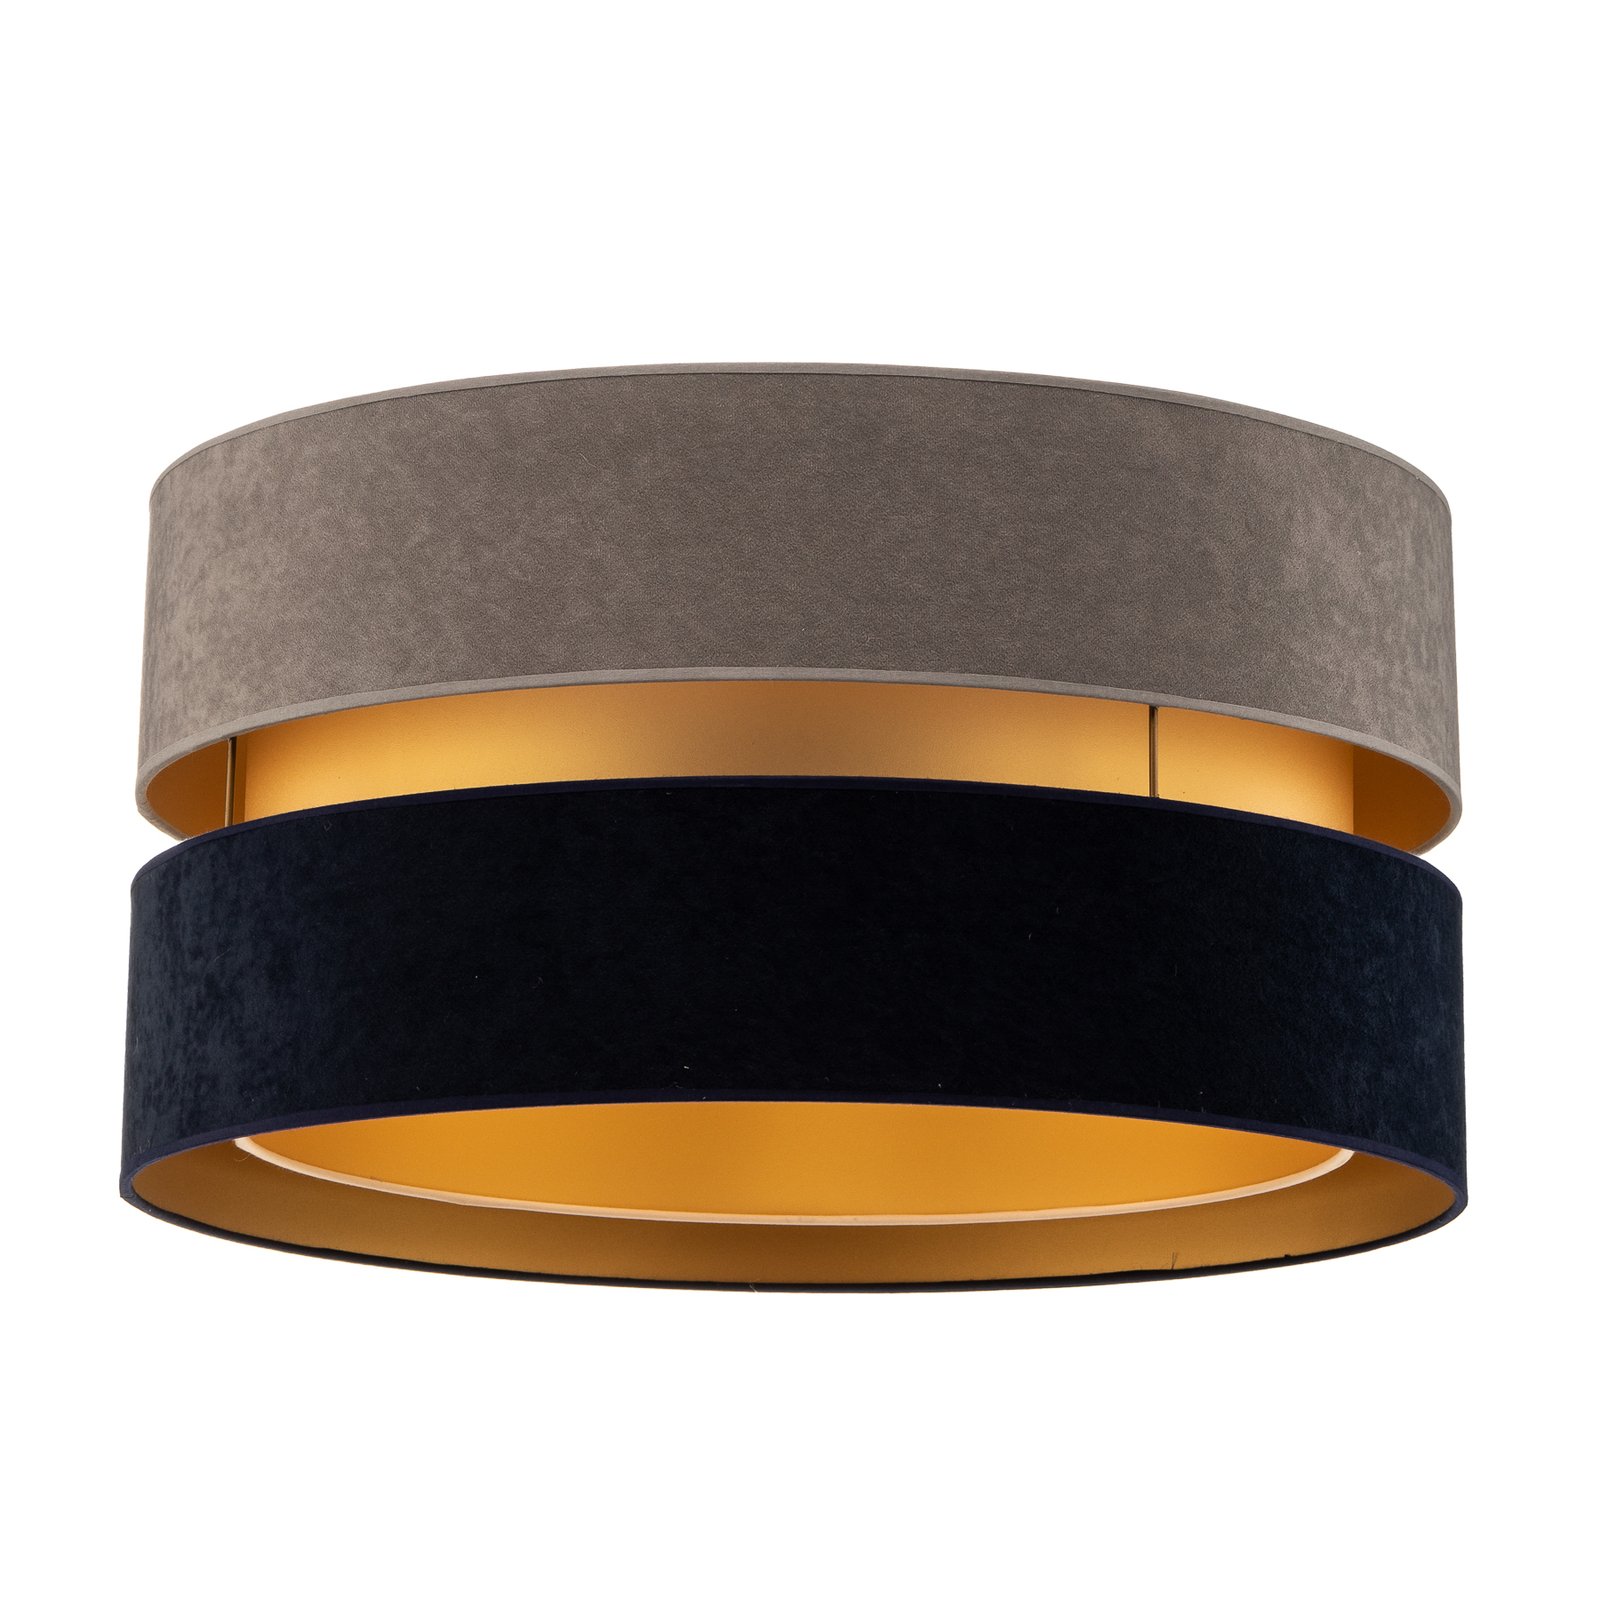 Duo ceiling light, navy blue/grey/gold, Ø 60 cm